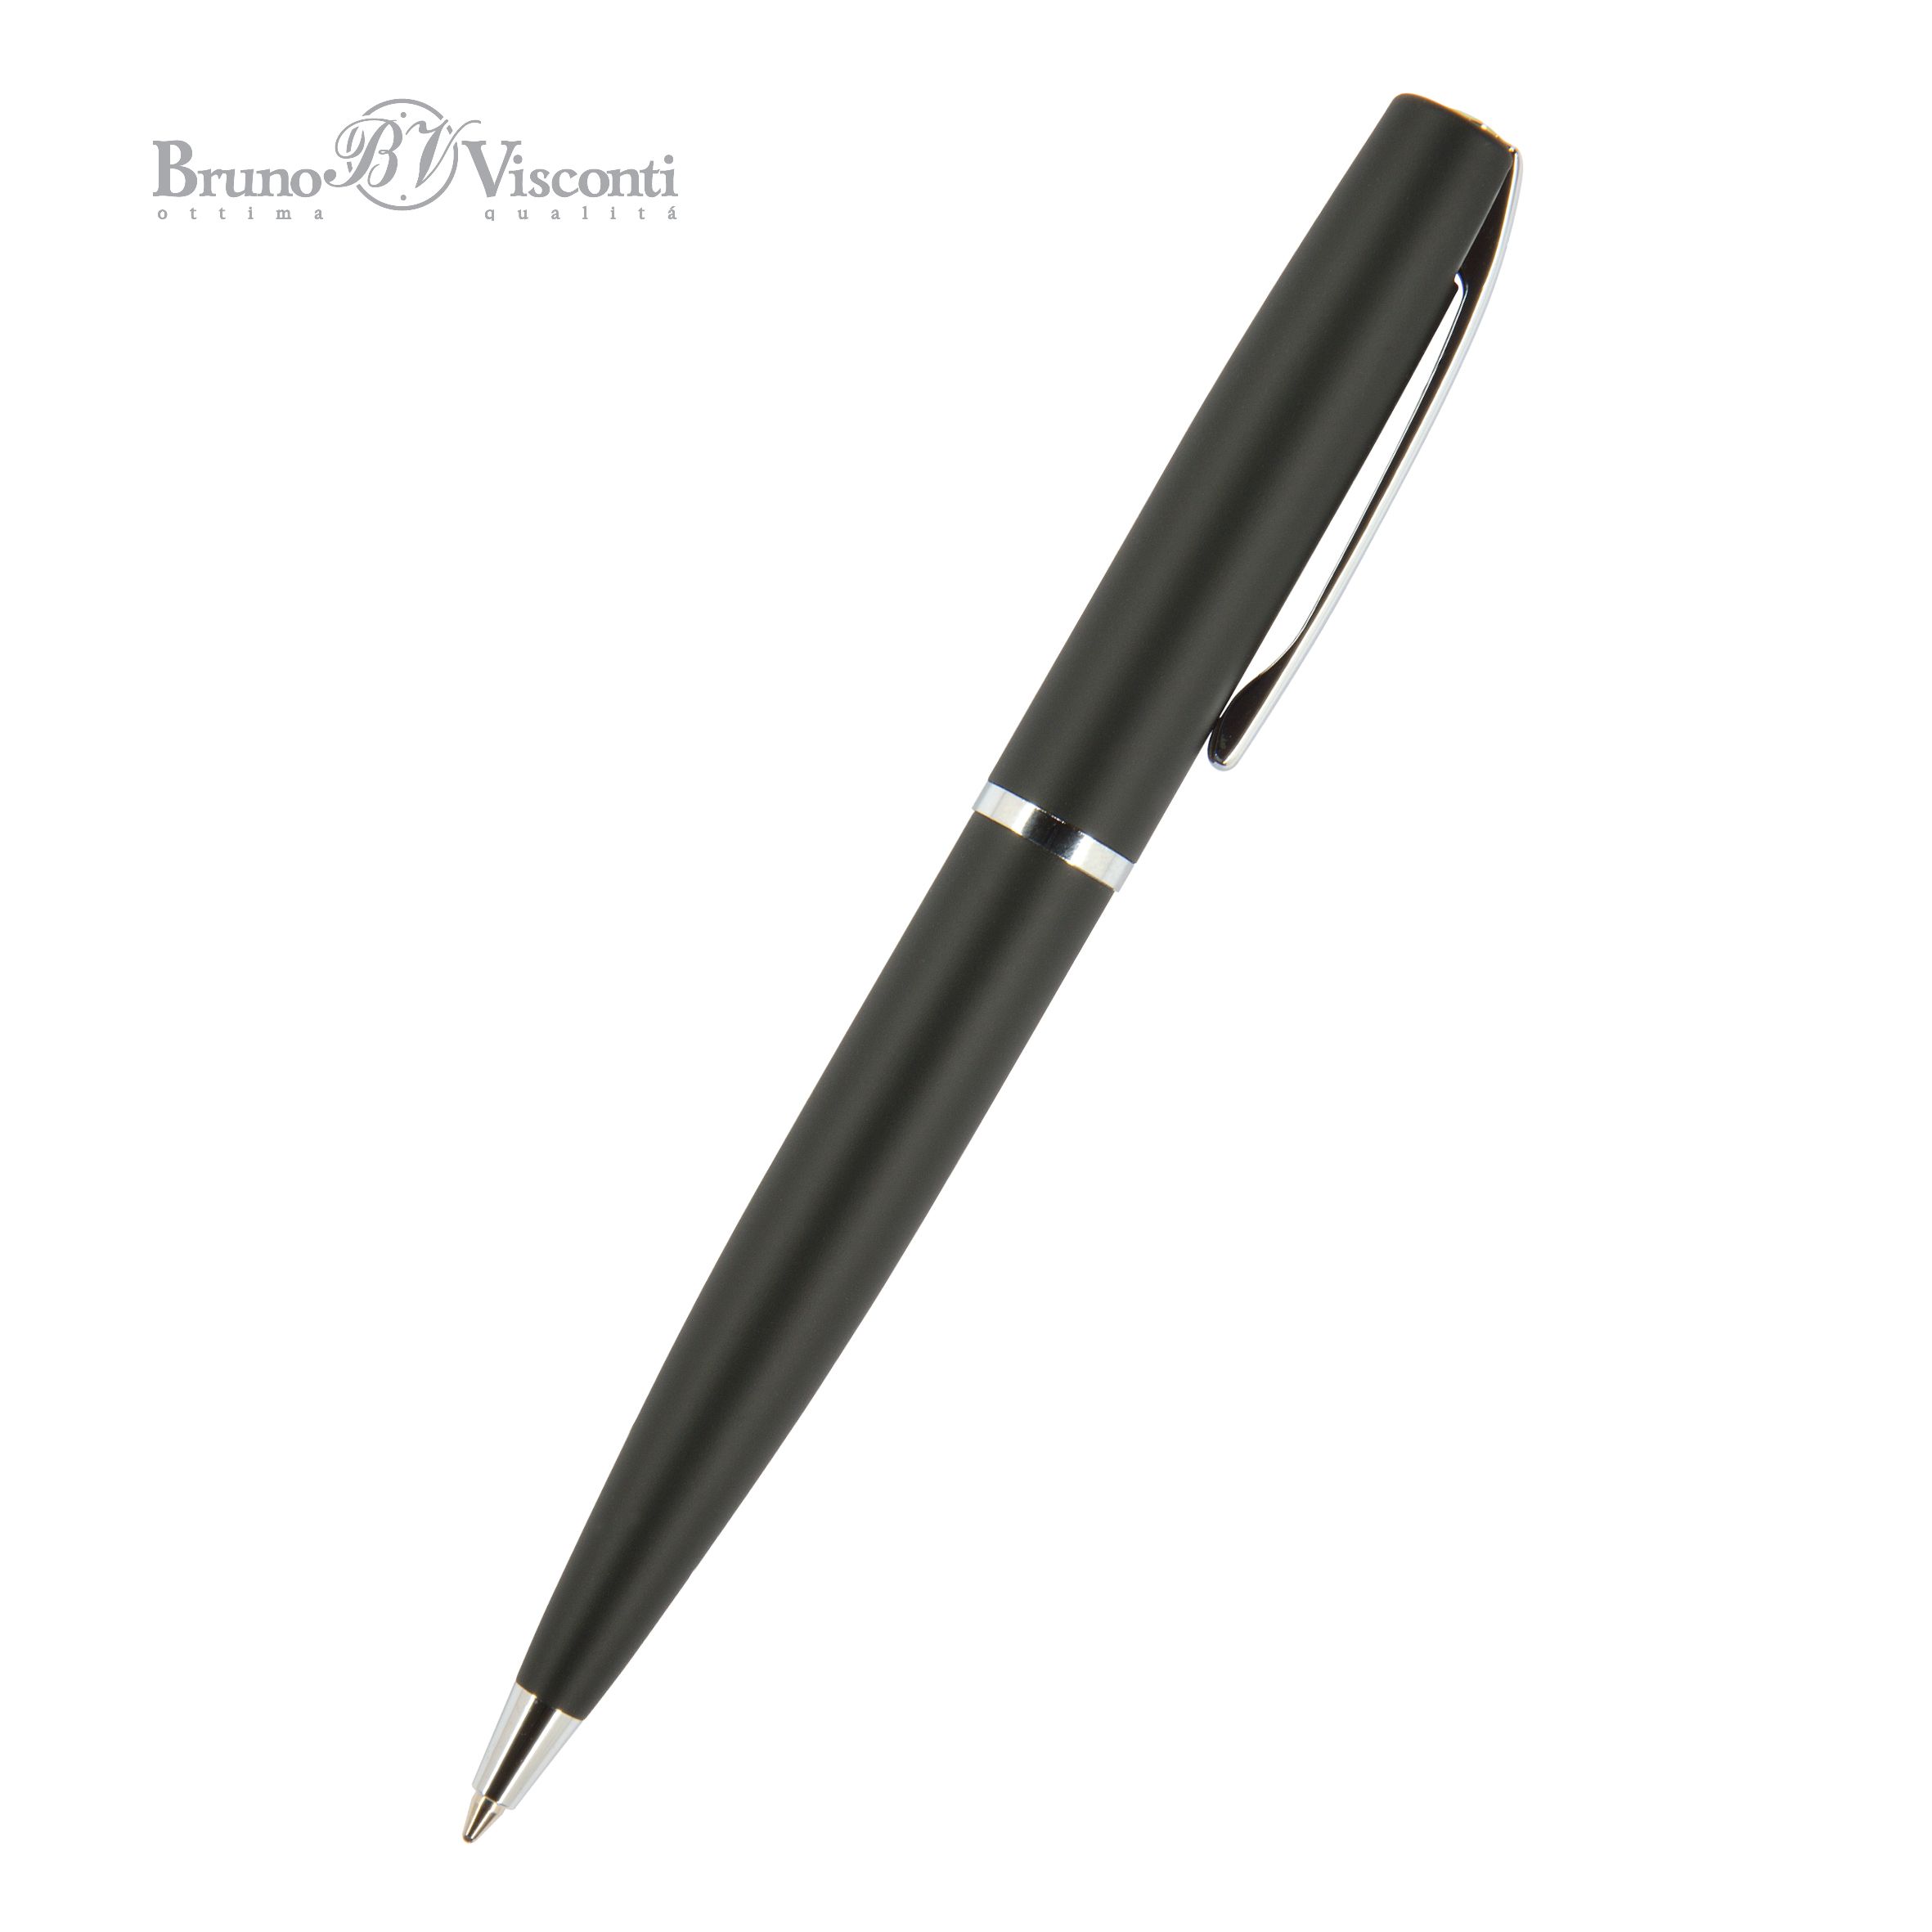 Ручка подар шар BV Sienna синяя 1мм авт (корпус черный, футляр черный)